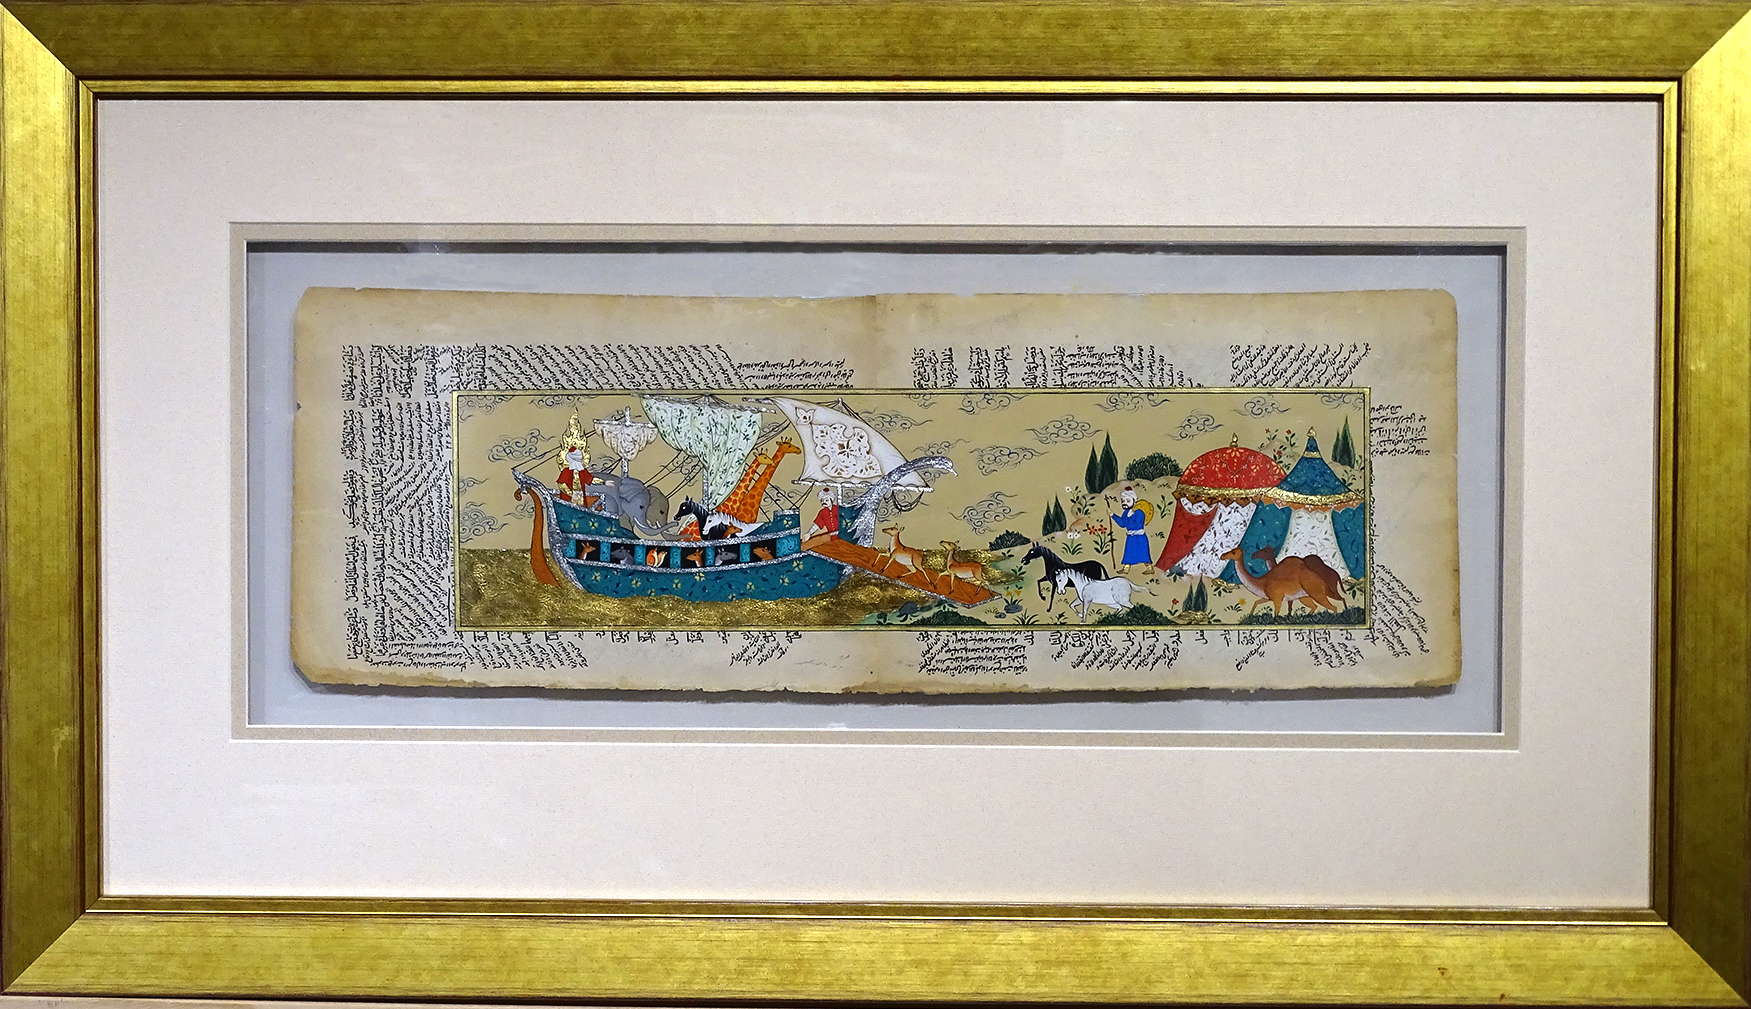 Noah's ark.  Egg Tempera and earth pigments on old manuscript possibly Persian